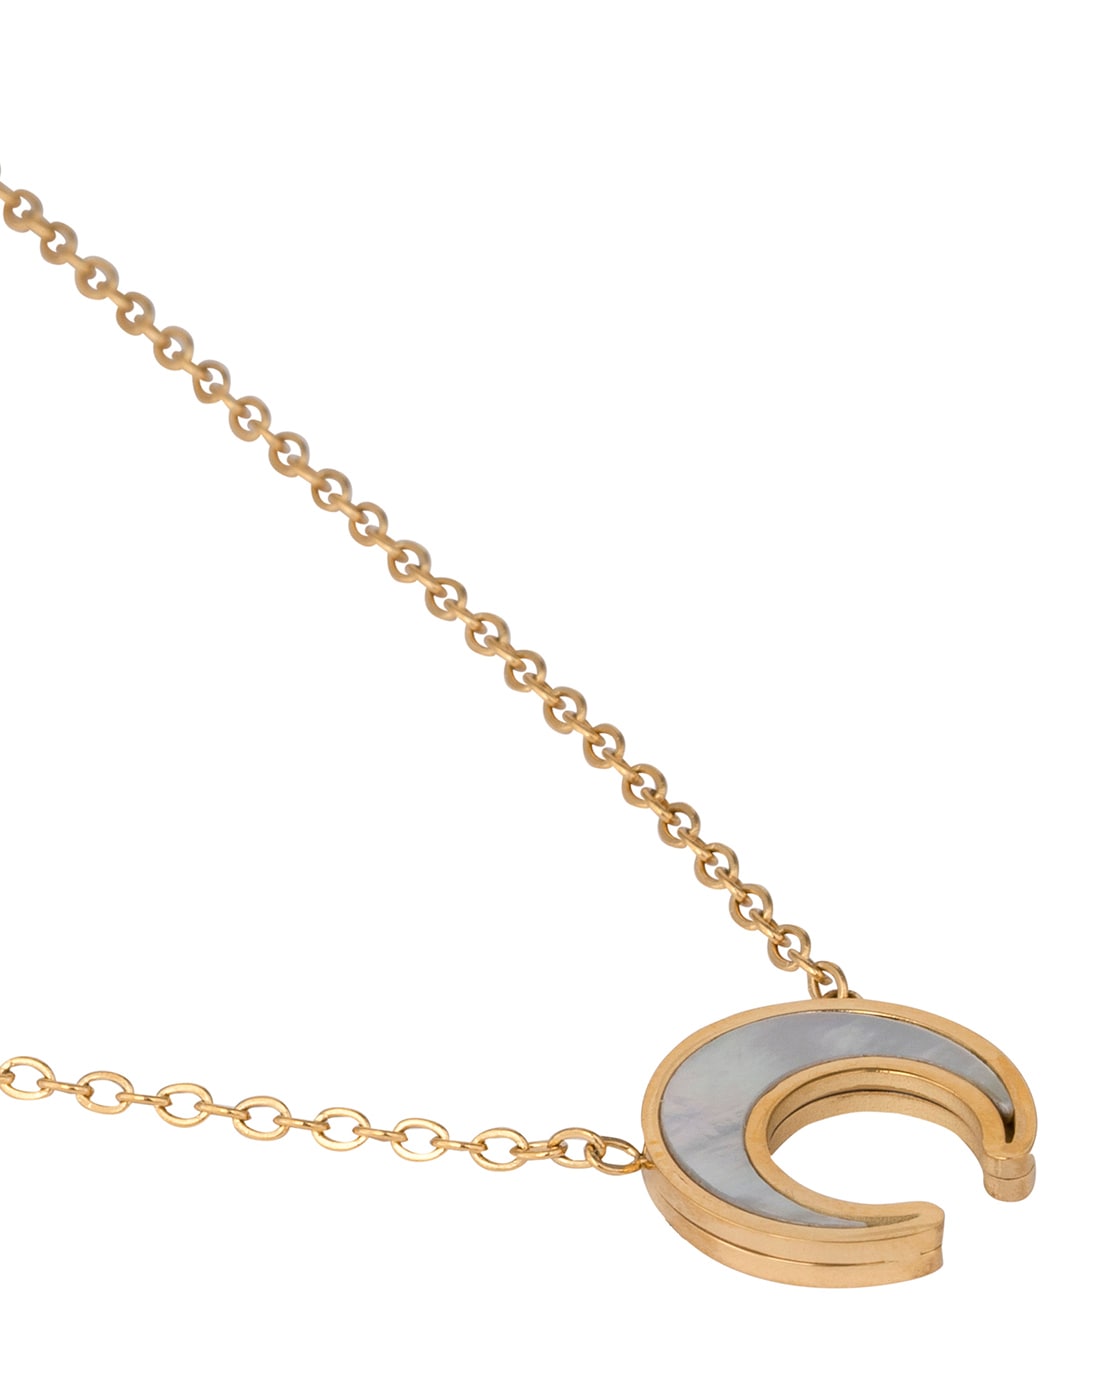 Moon Neck Chain neck chain for women contemporary necklace, minimal necklace  – AZGA